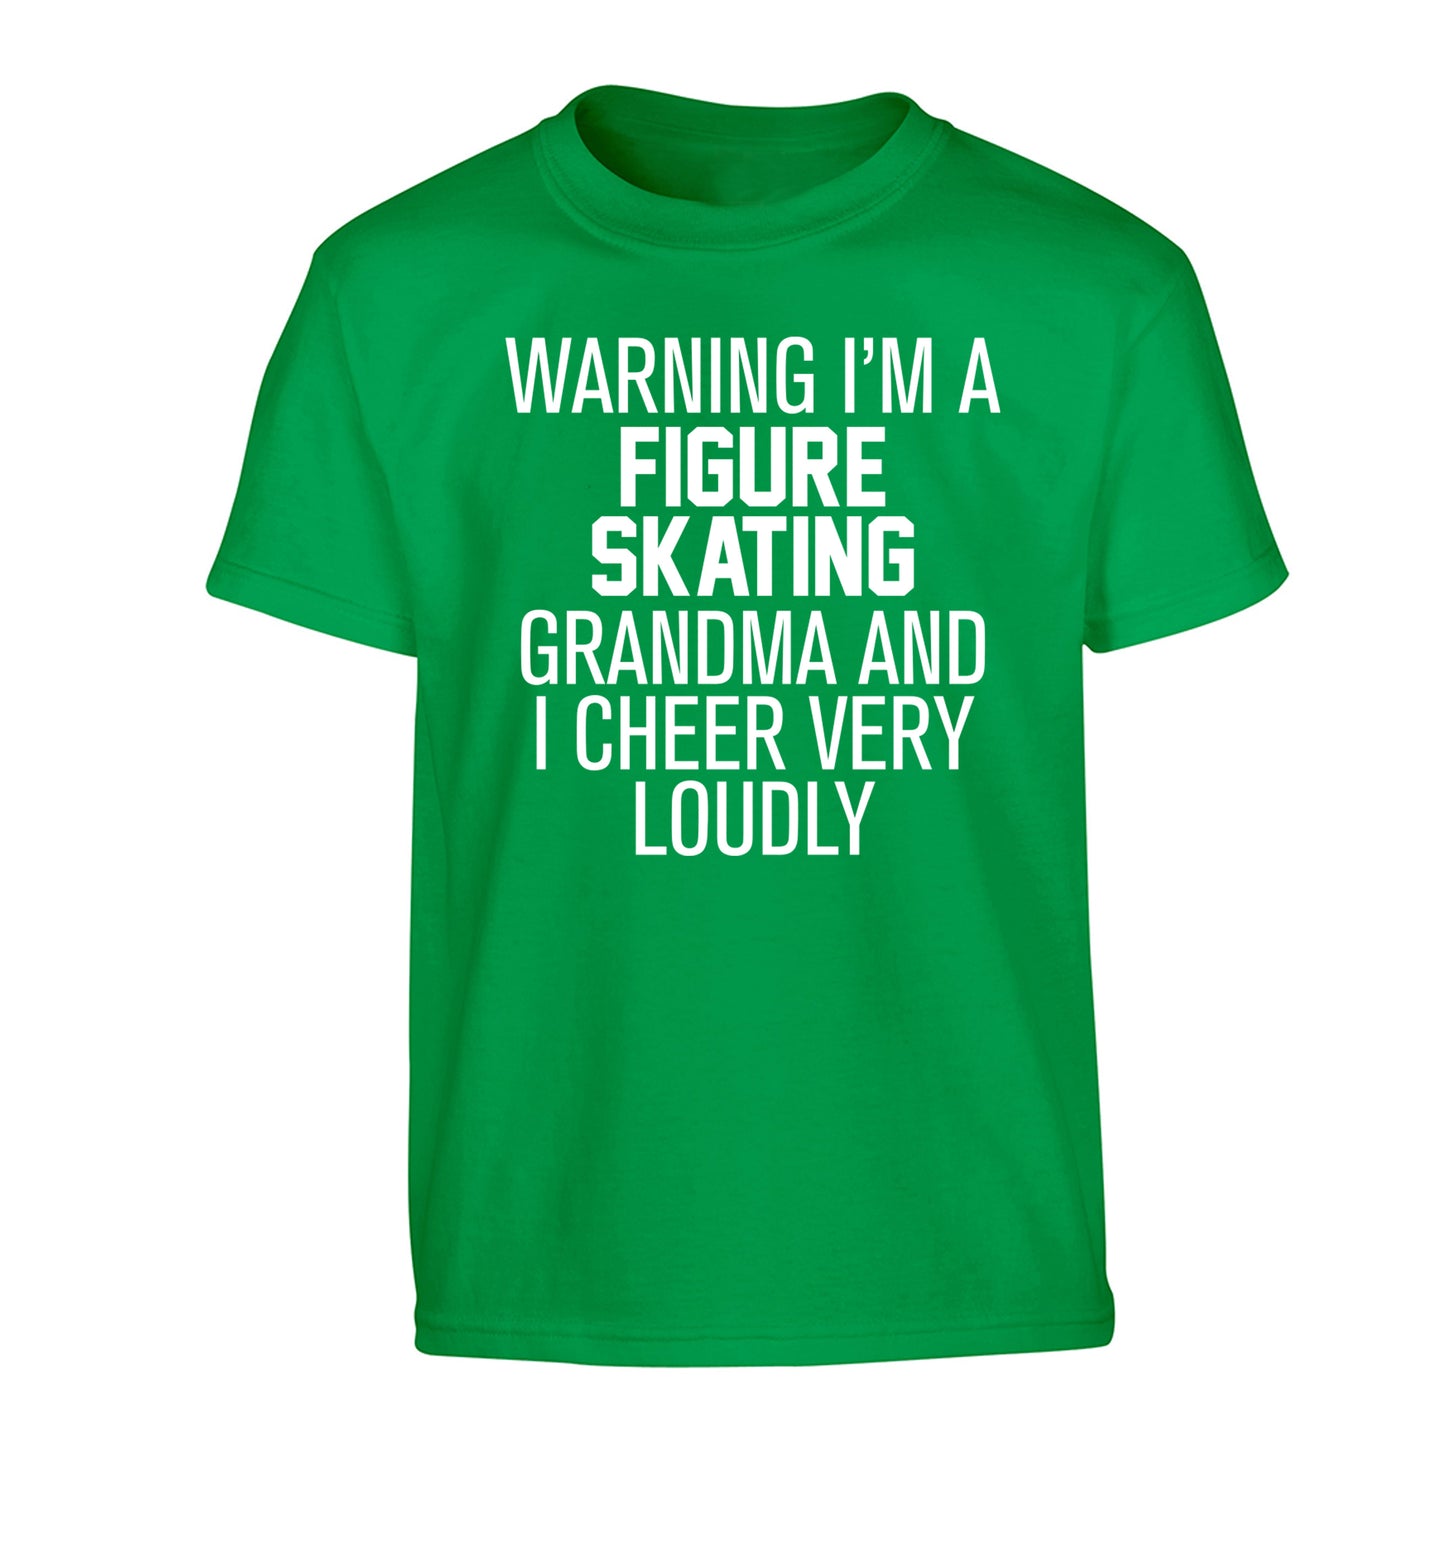 Warning I'm a figure skating grandma and I cheer very loudly Children's green Tshirt 12-14 Years